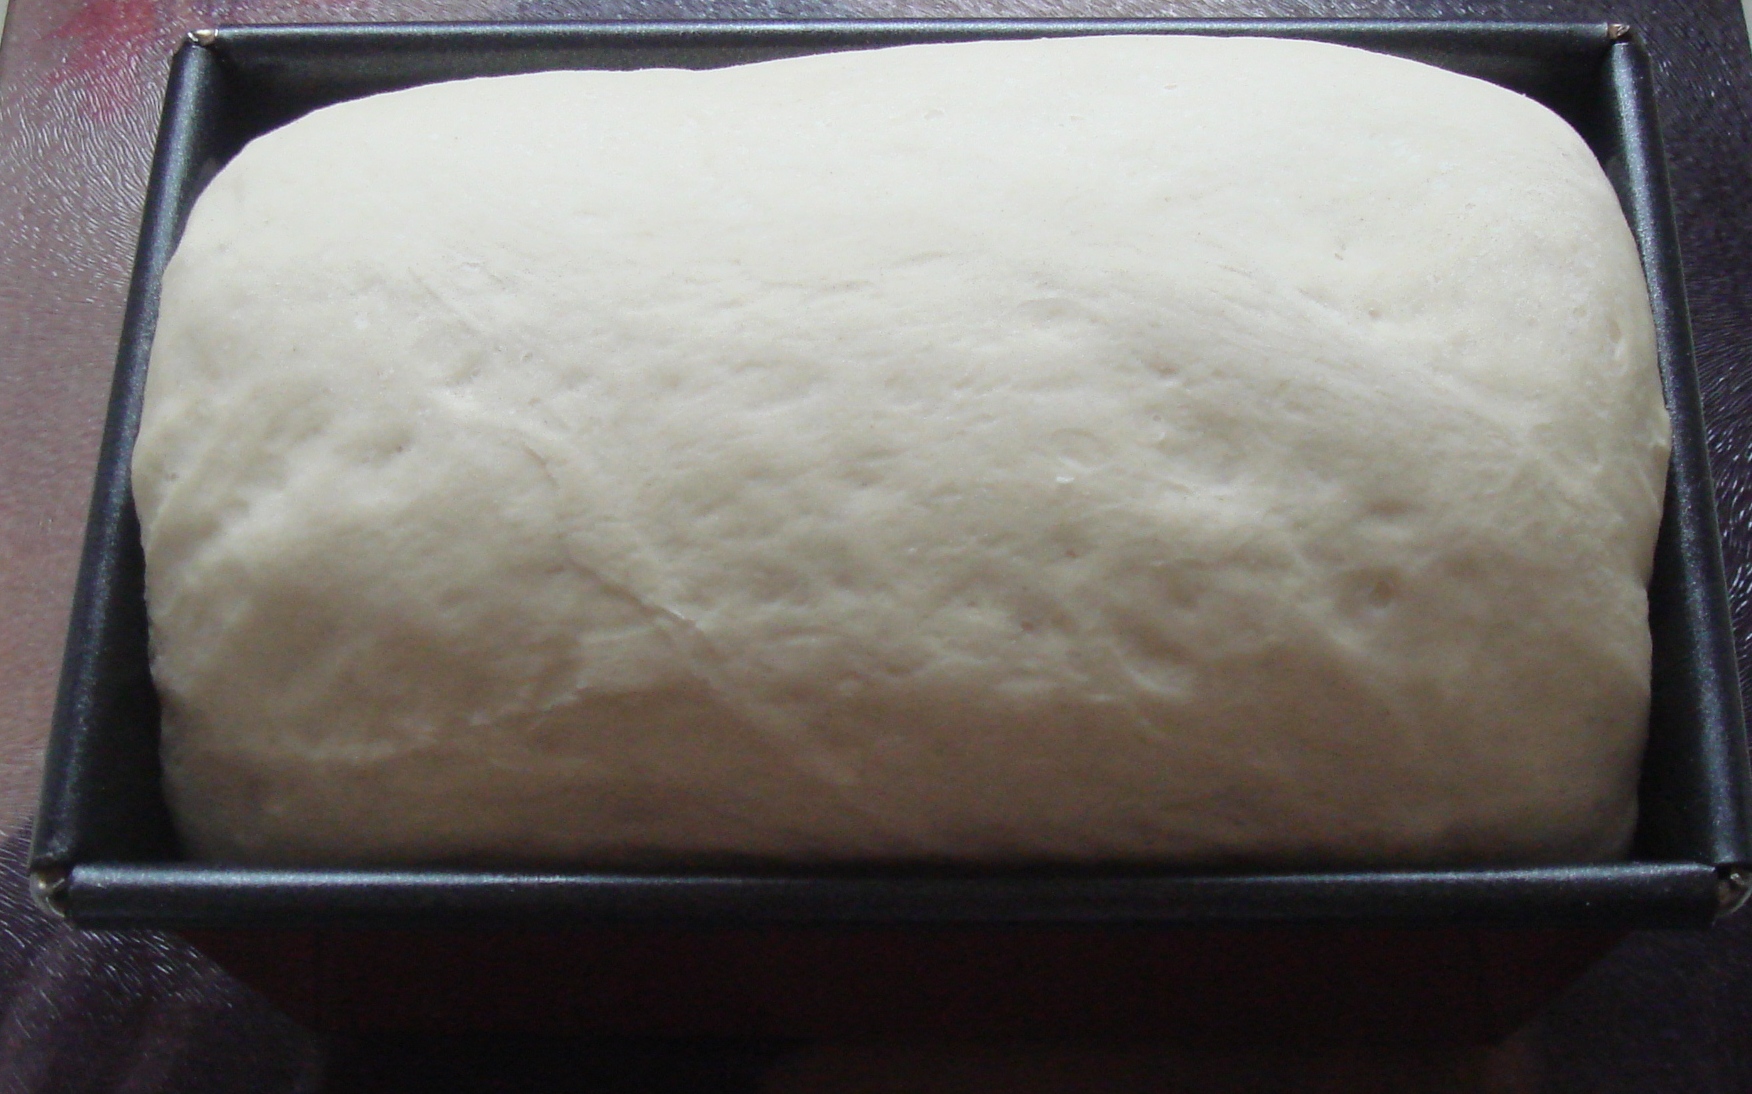 Rising bread dough in a pan